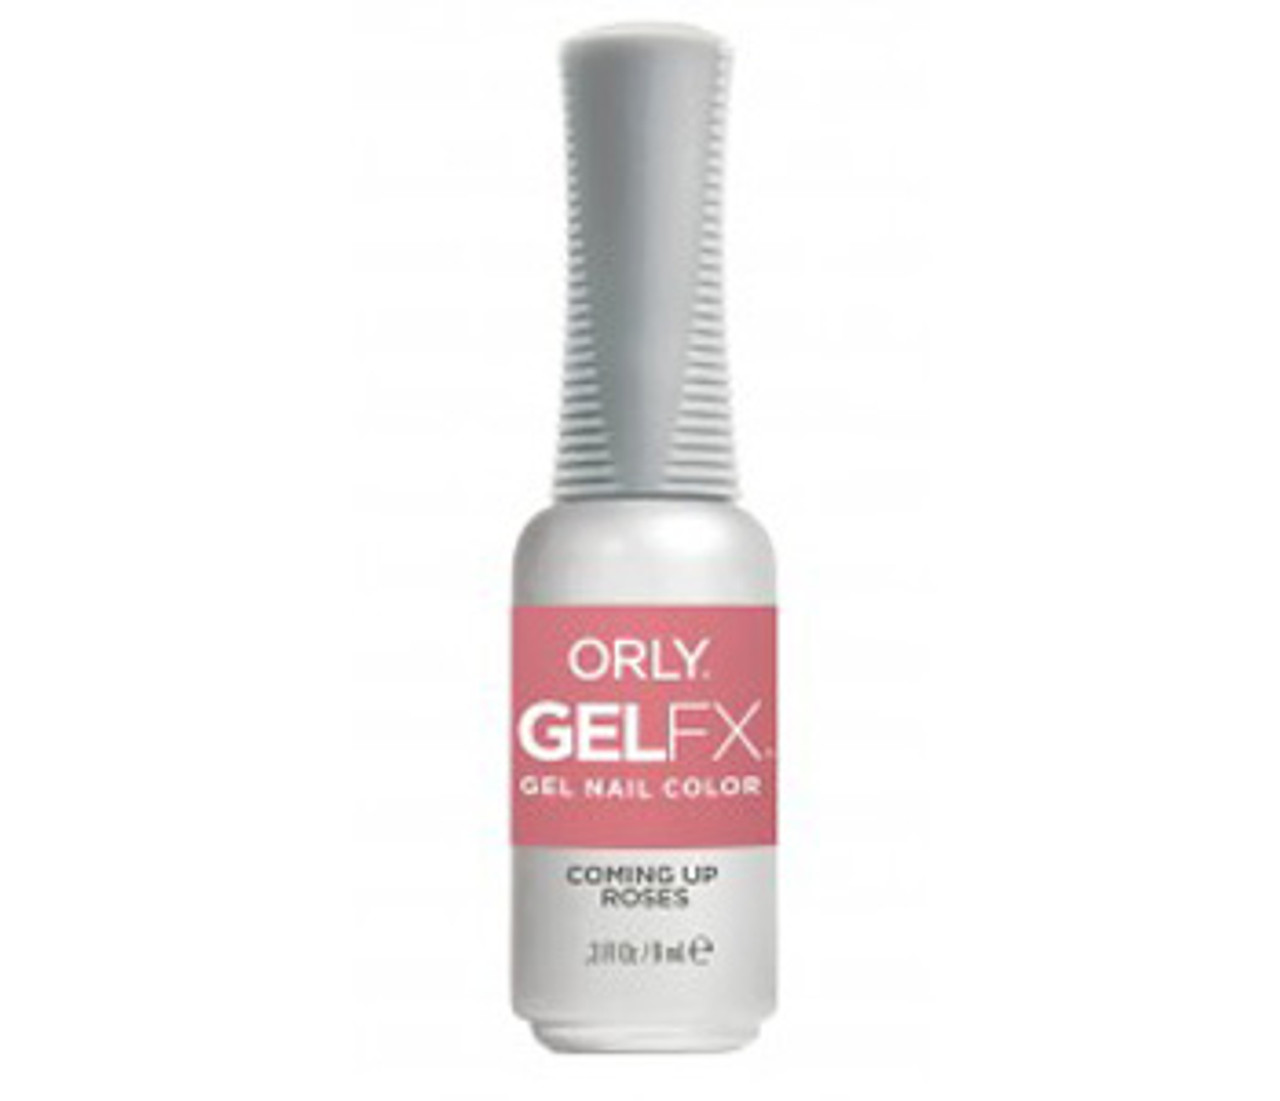 Orly Gel FX Soak-Off Gel Coming Up Roses - Bubblegum Mauve Creme - .3 fl oz / 9 ml